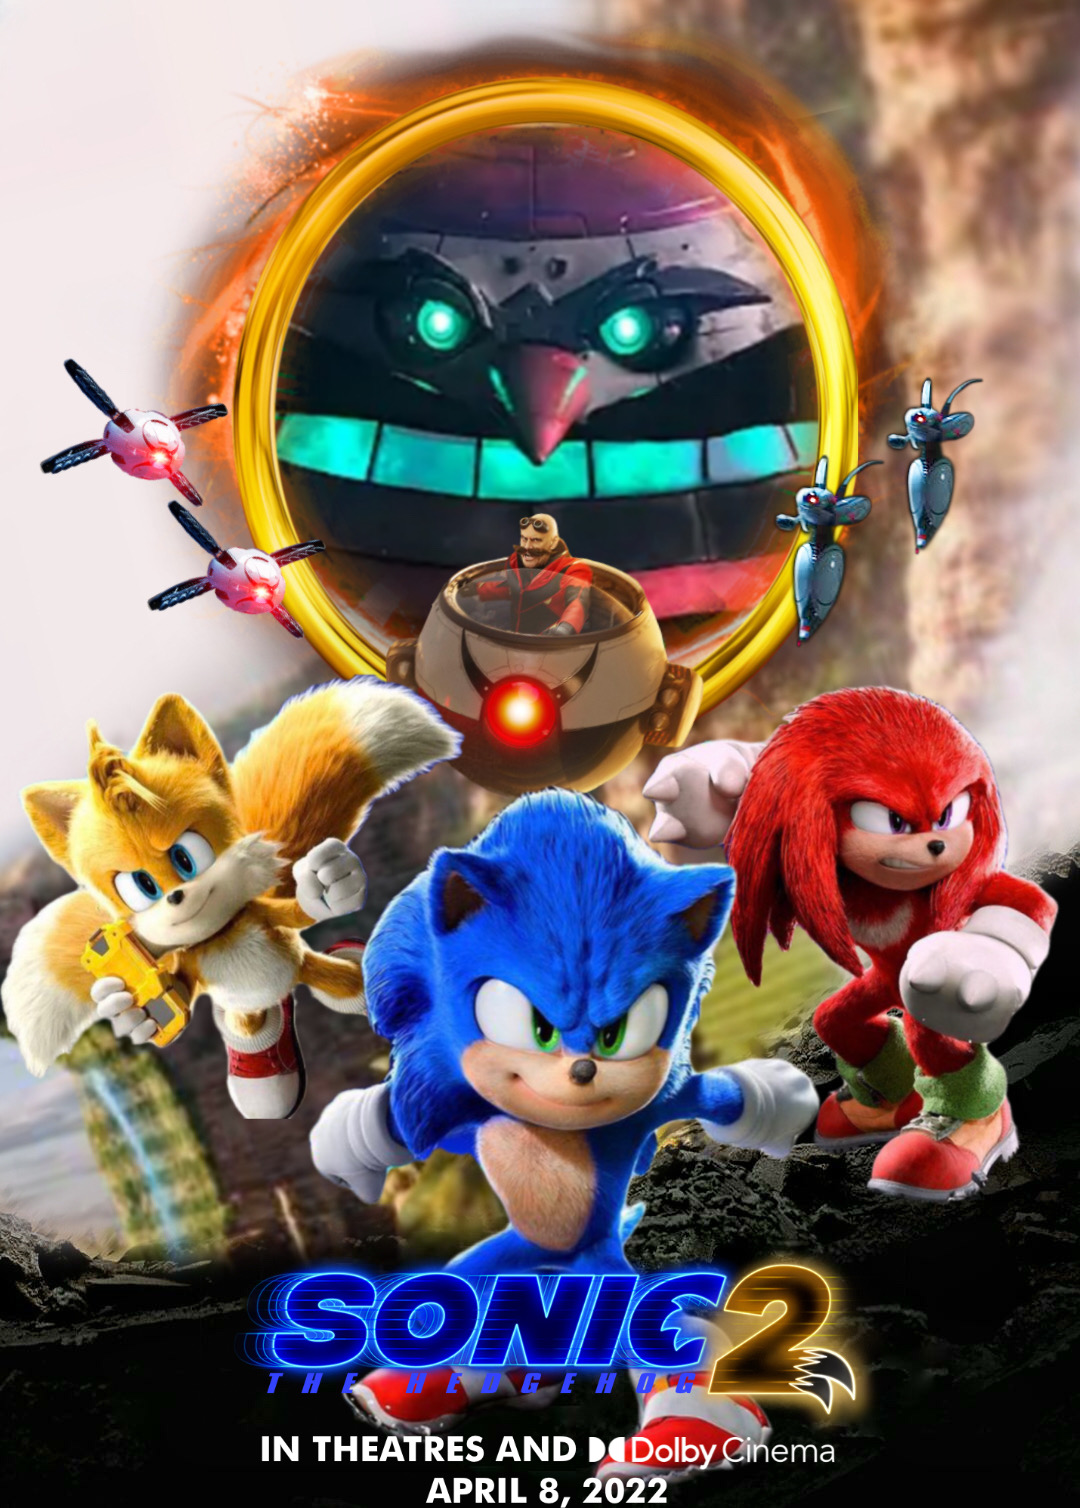 Sonic the Hedgehog (Movie) (2) - PNG by Captain-Kingsman16 on DeviantArt